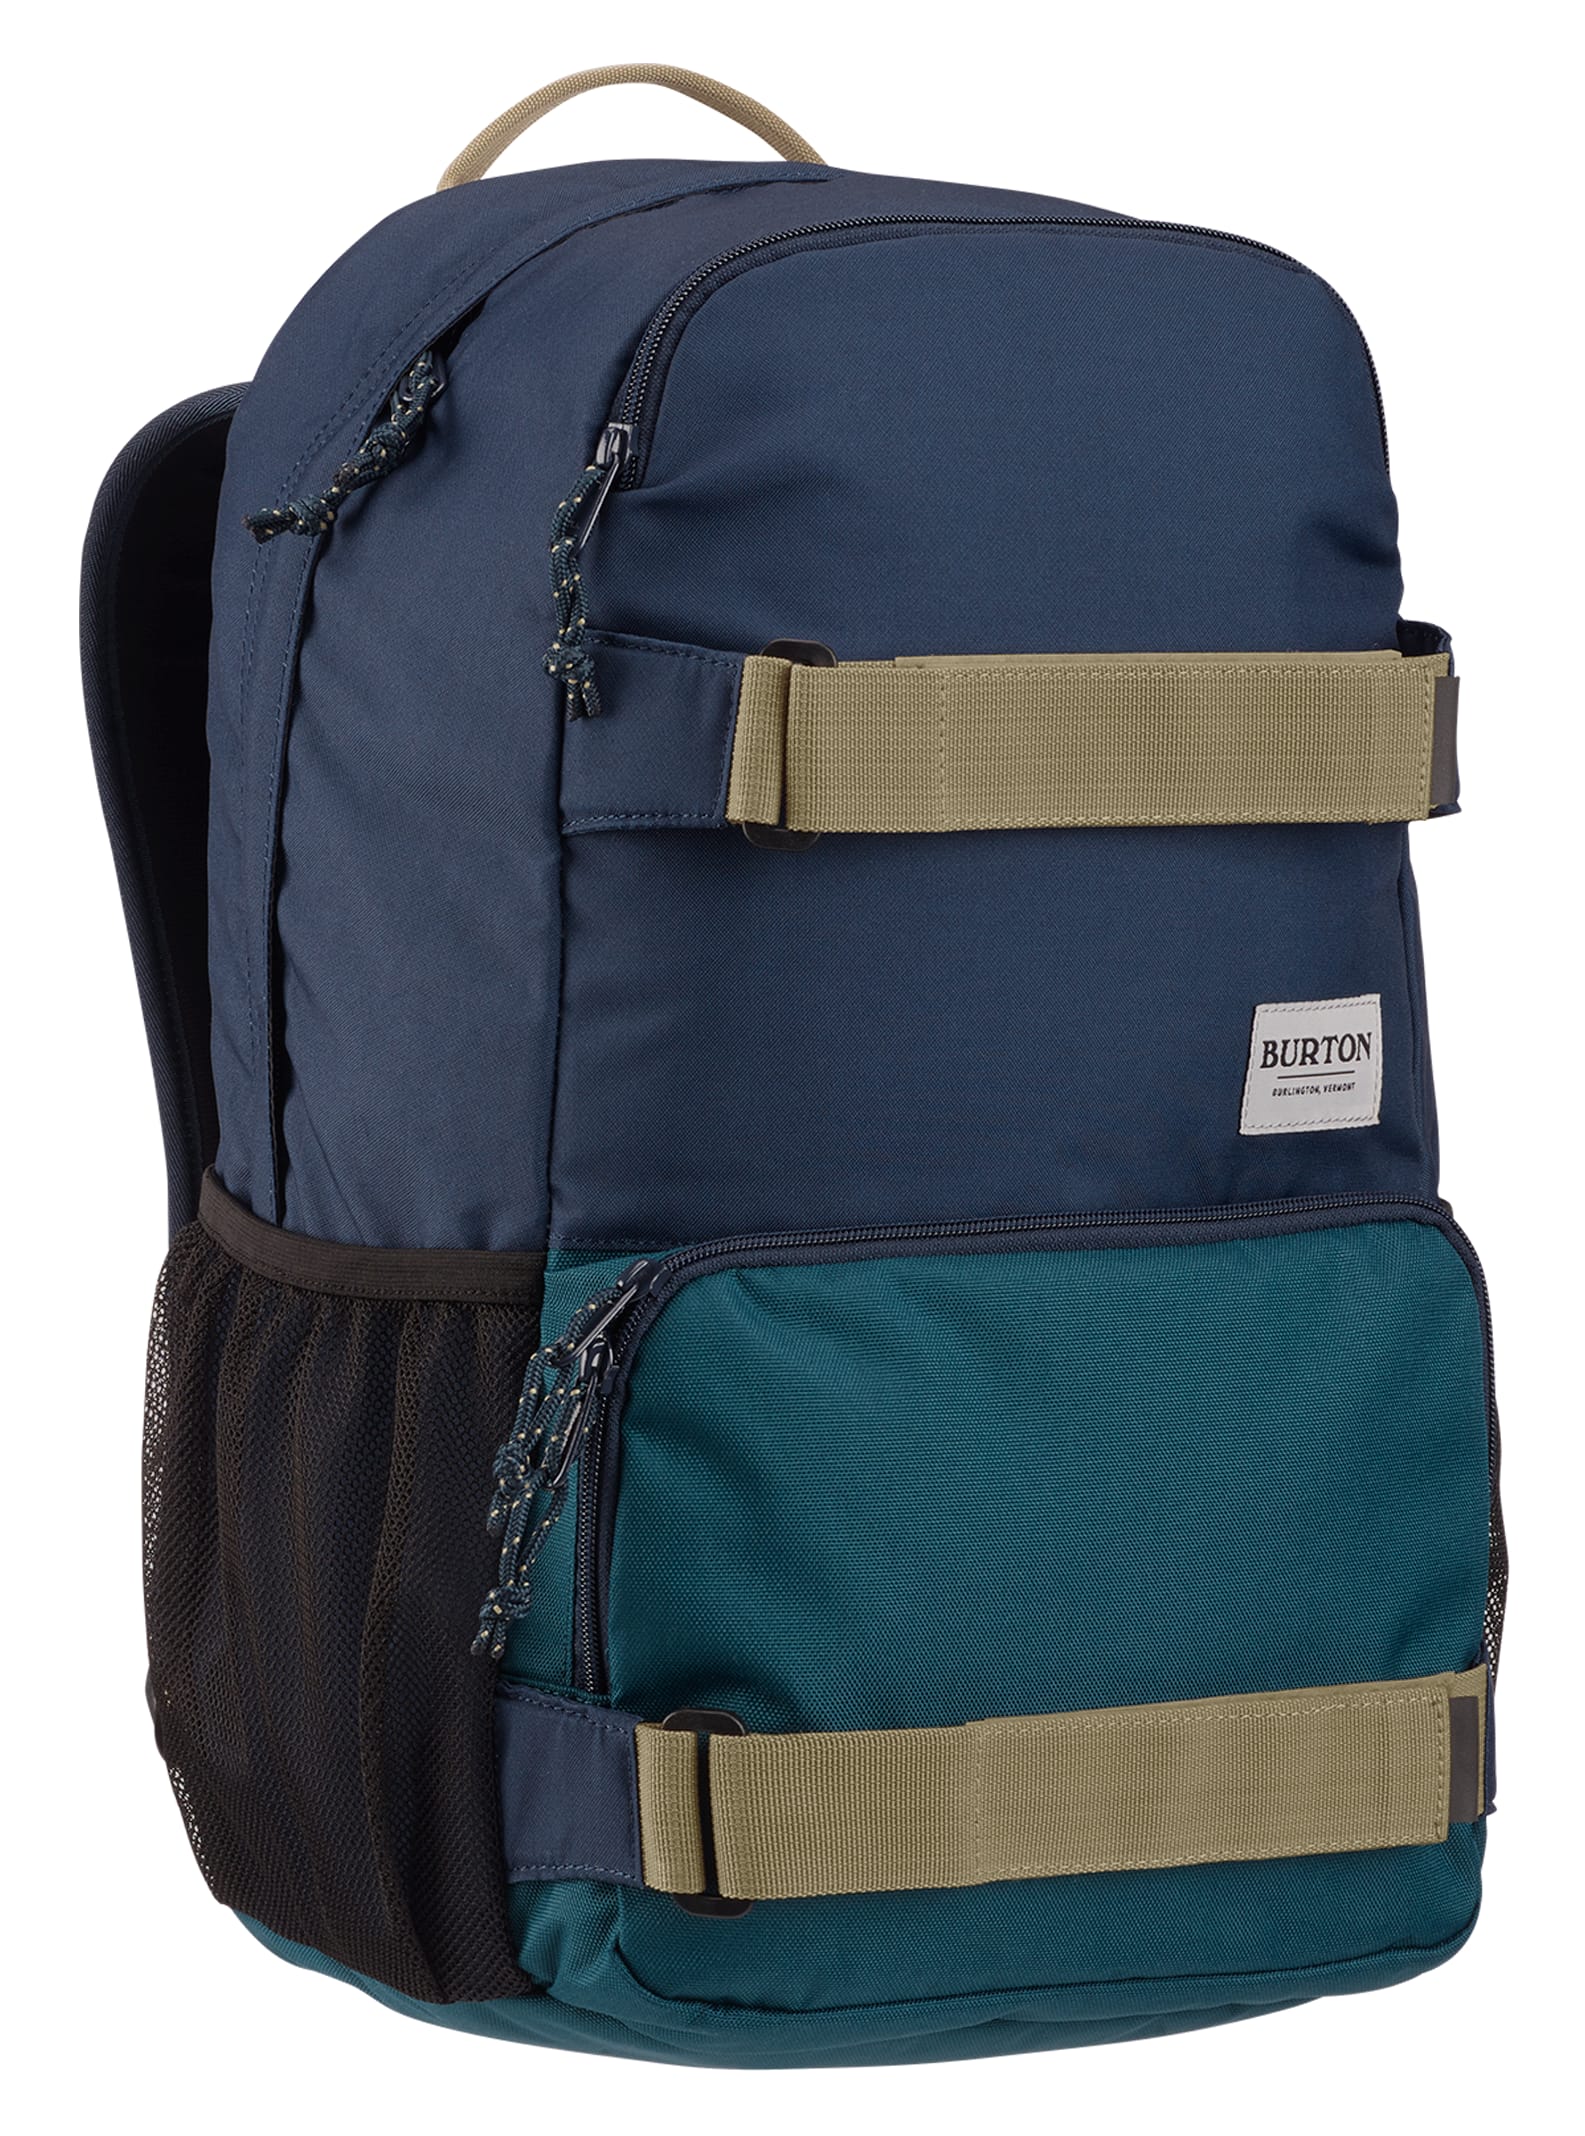 Burton Treble Yell 21L Backpack | Burton.com Winter 2020 IT